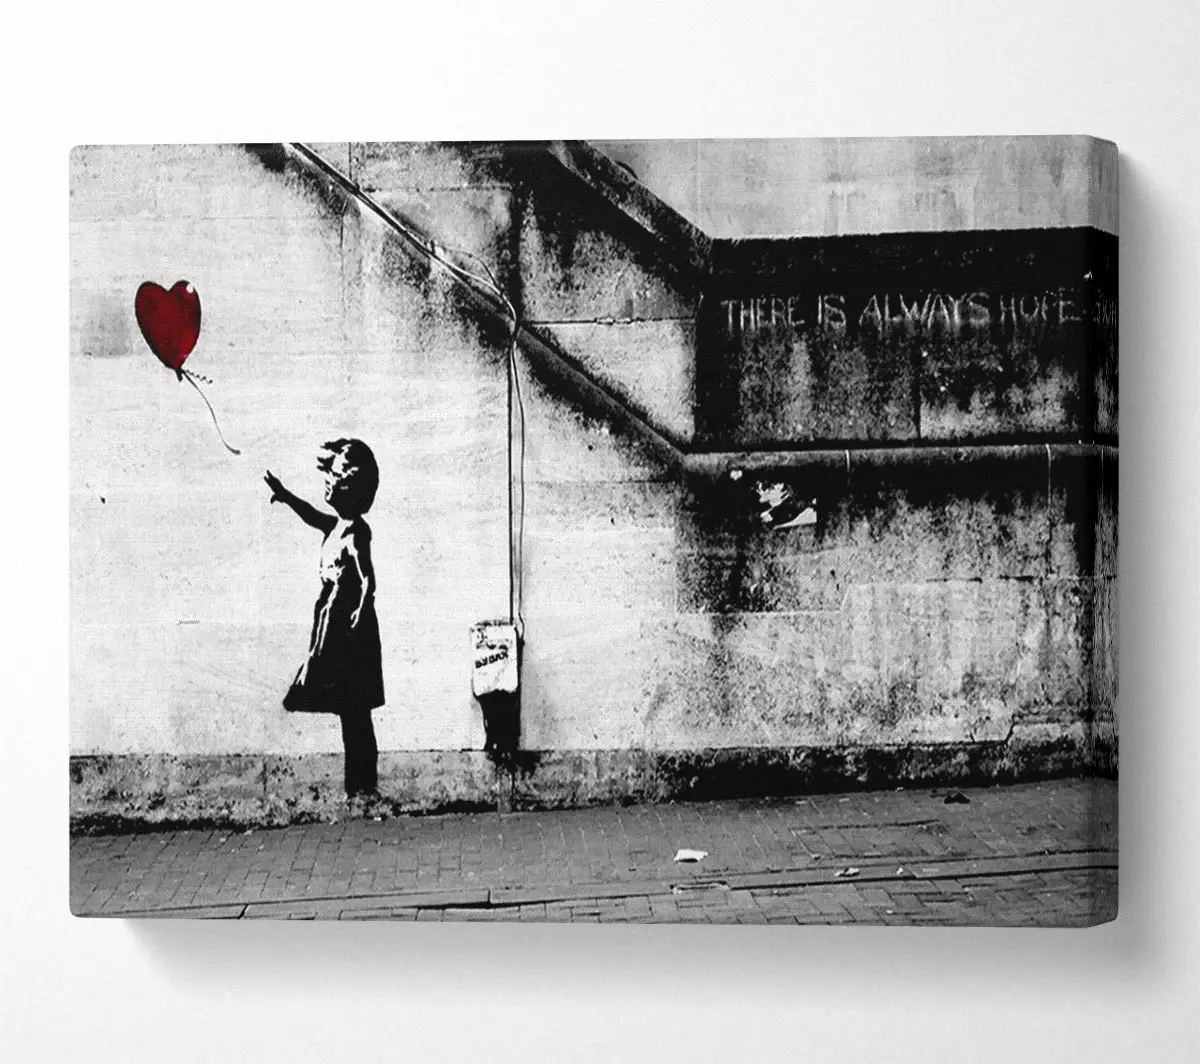 Roter Herzballon M盲dchen Wandkunst